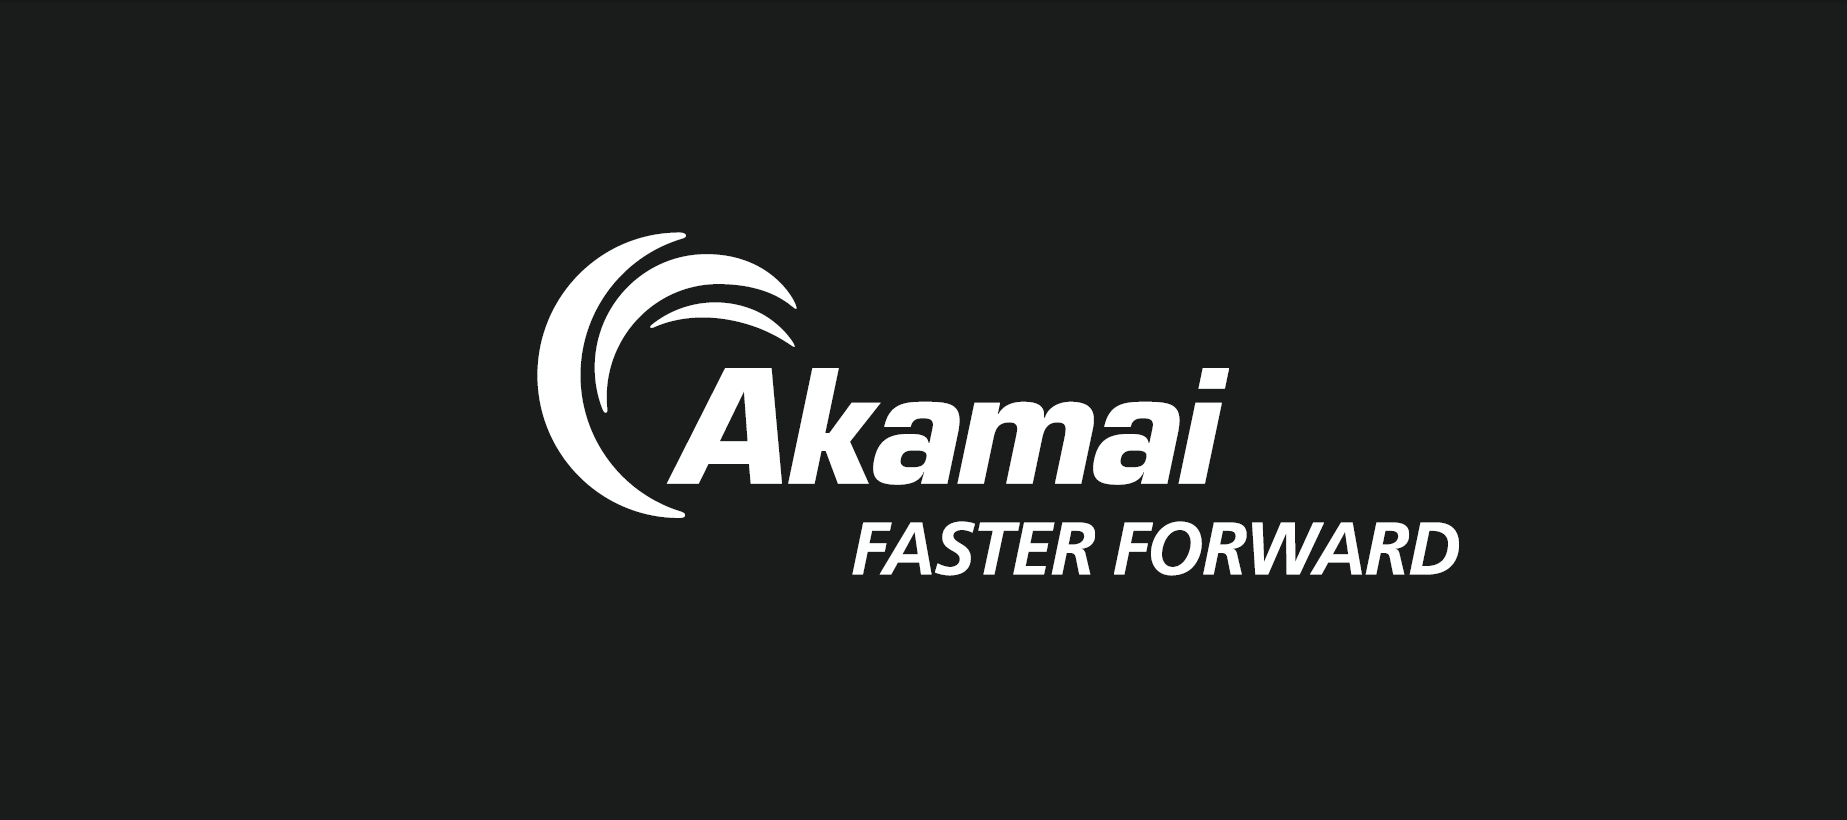 Akamai State of the Internet (Q1 2014)